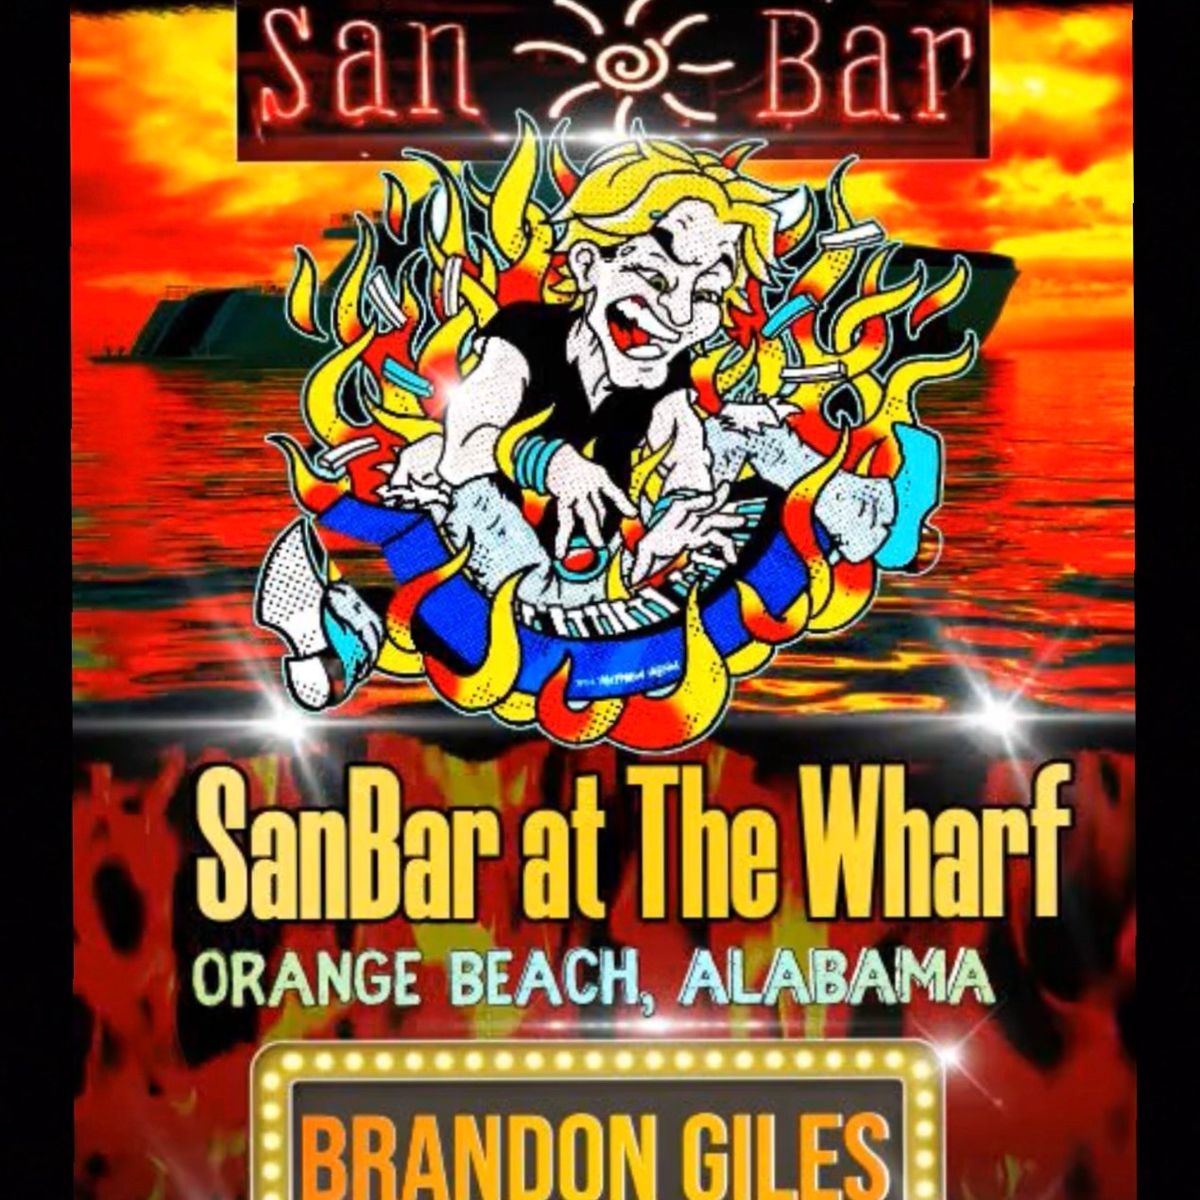 Brandon Giles live at SanBar at The Wharf, Orange Beach, Alabama 